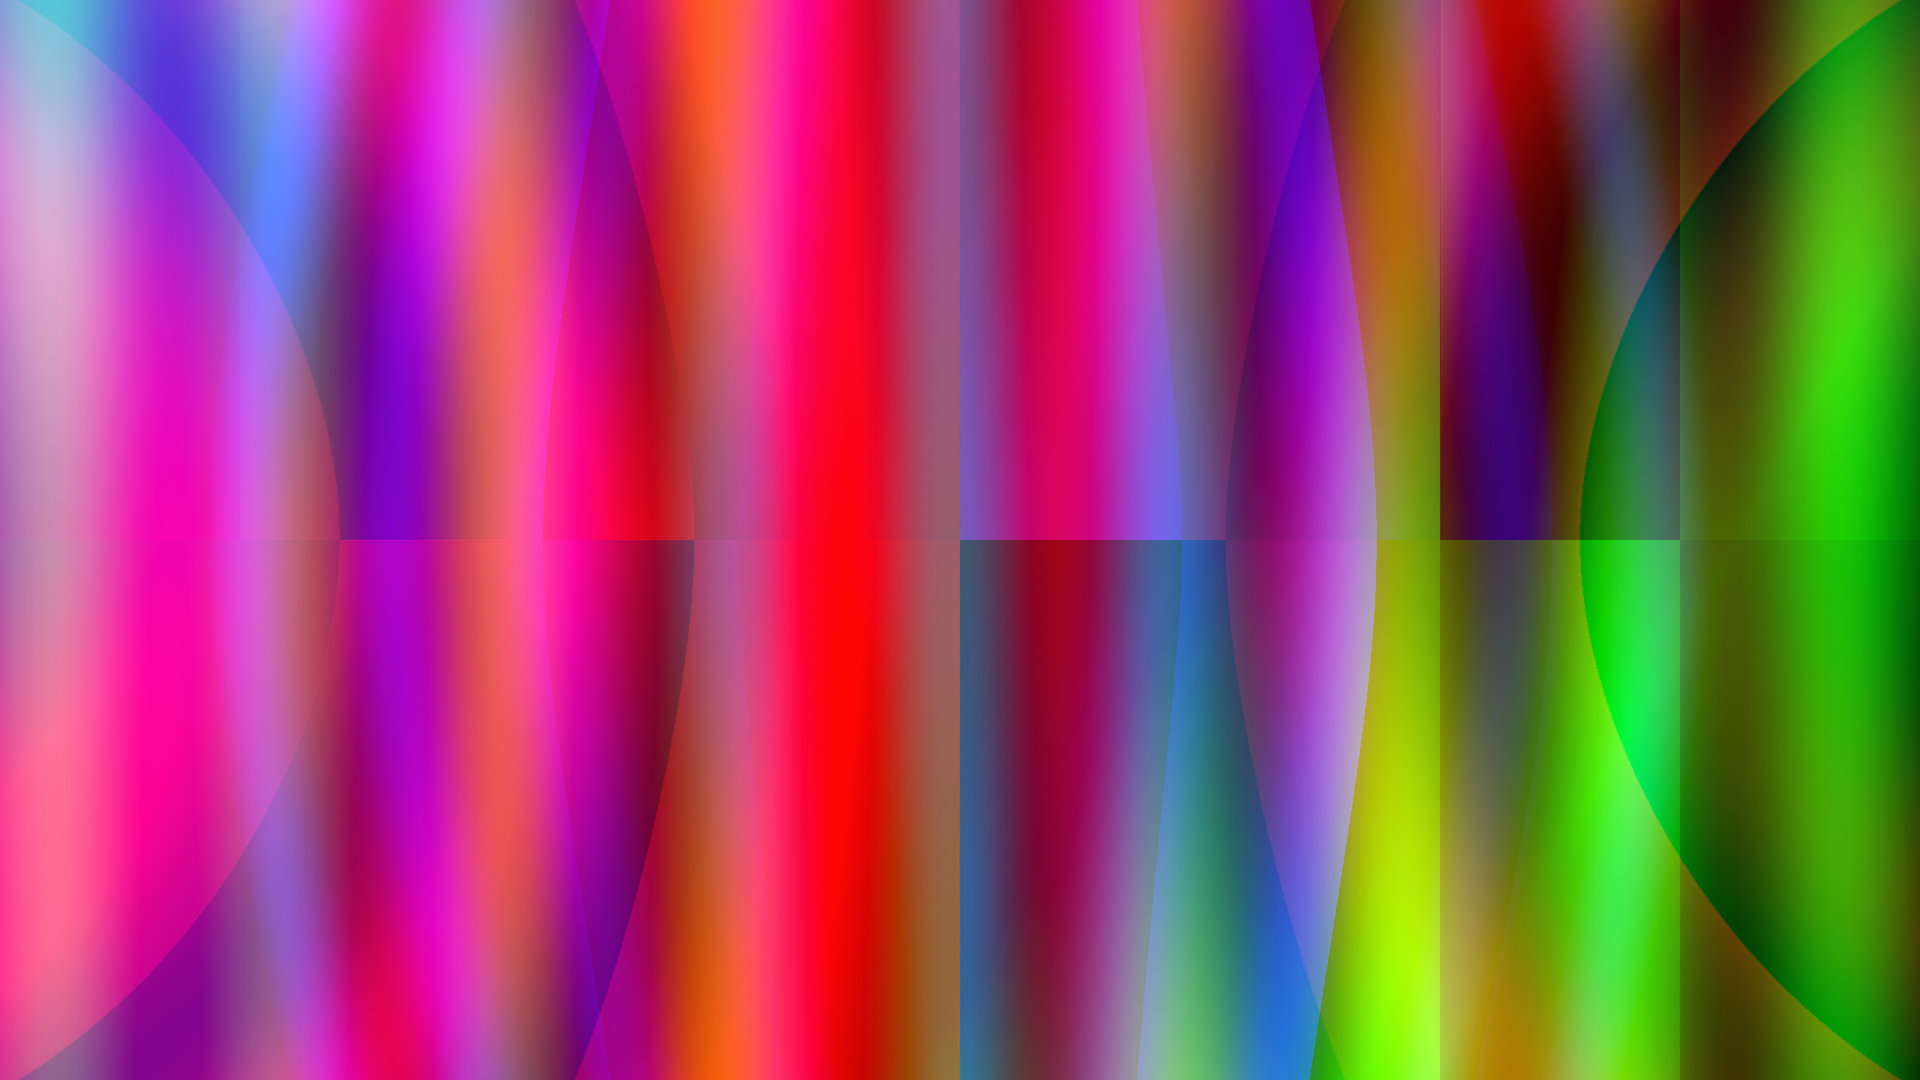 Artistic Rainbow Digital Art Gradient 2K Abstract